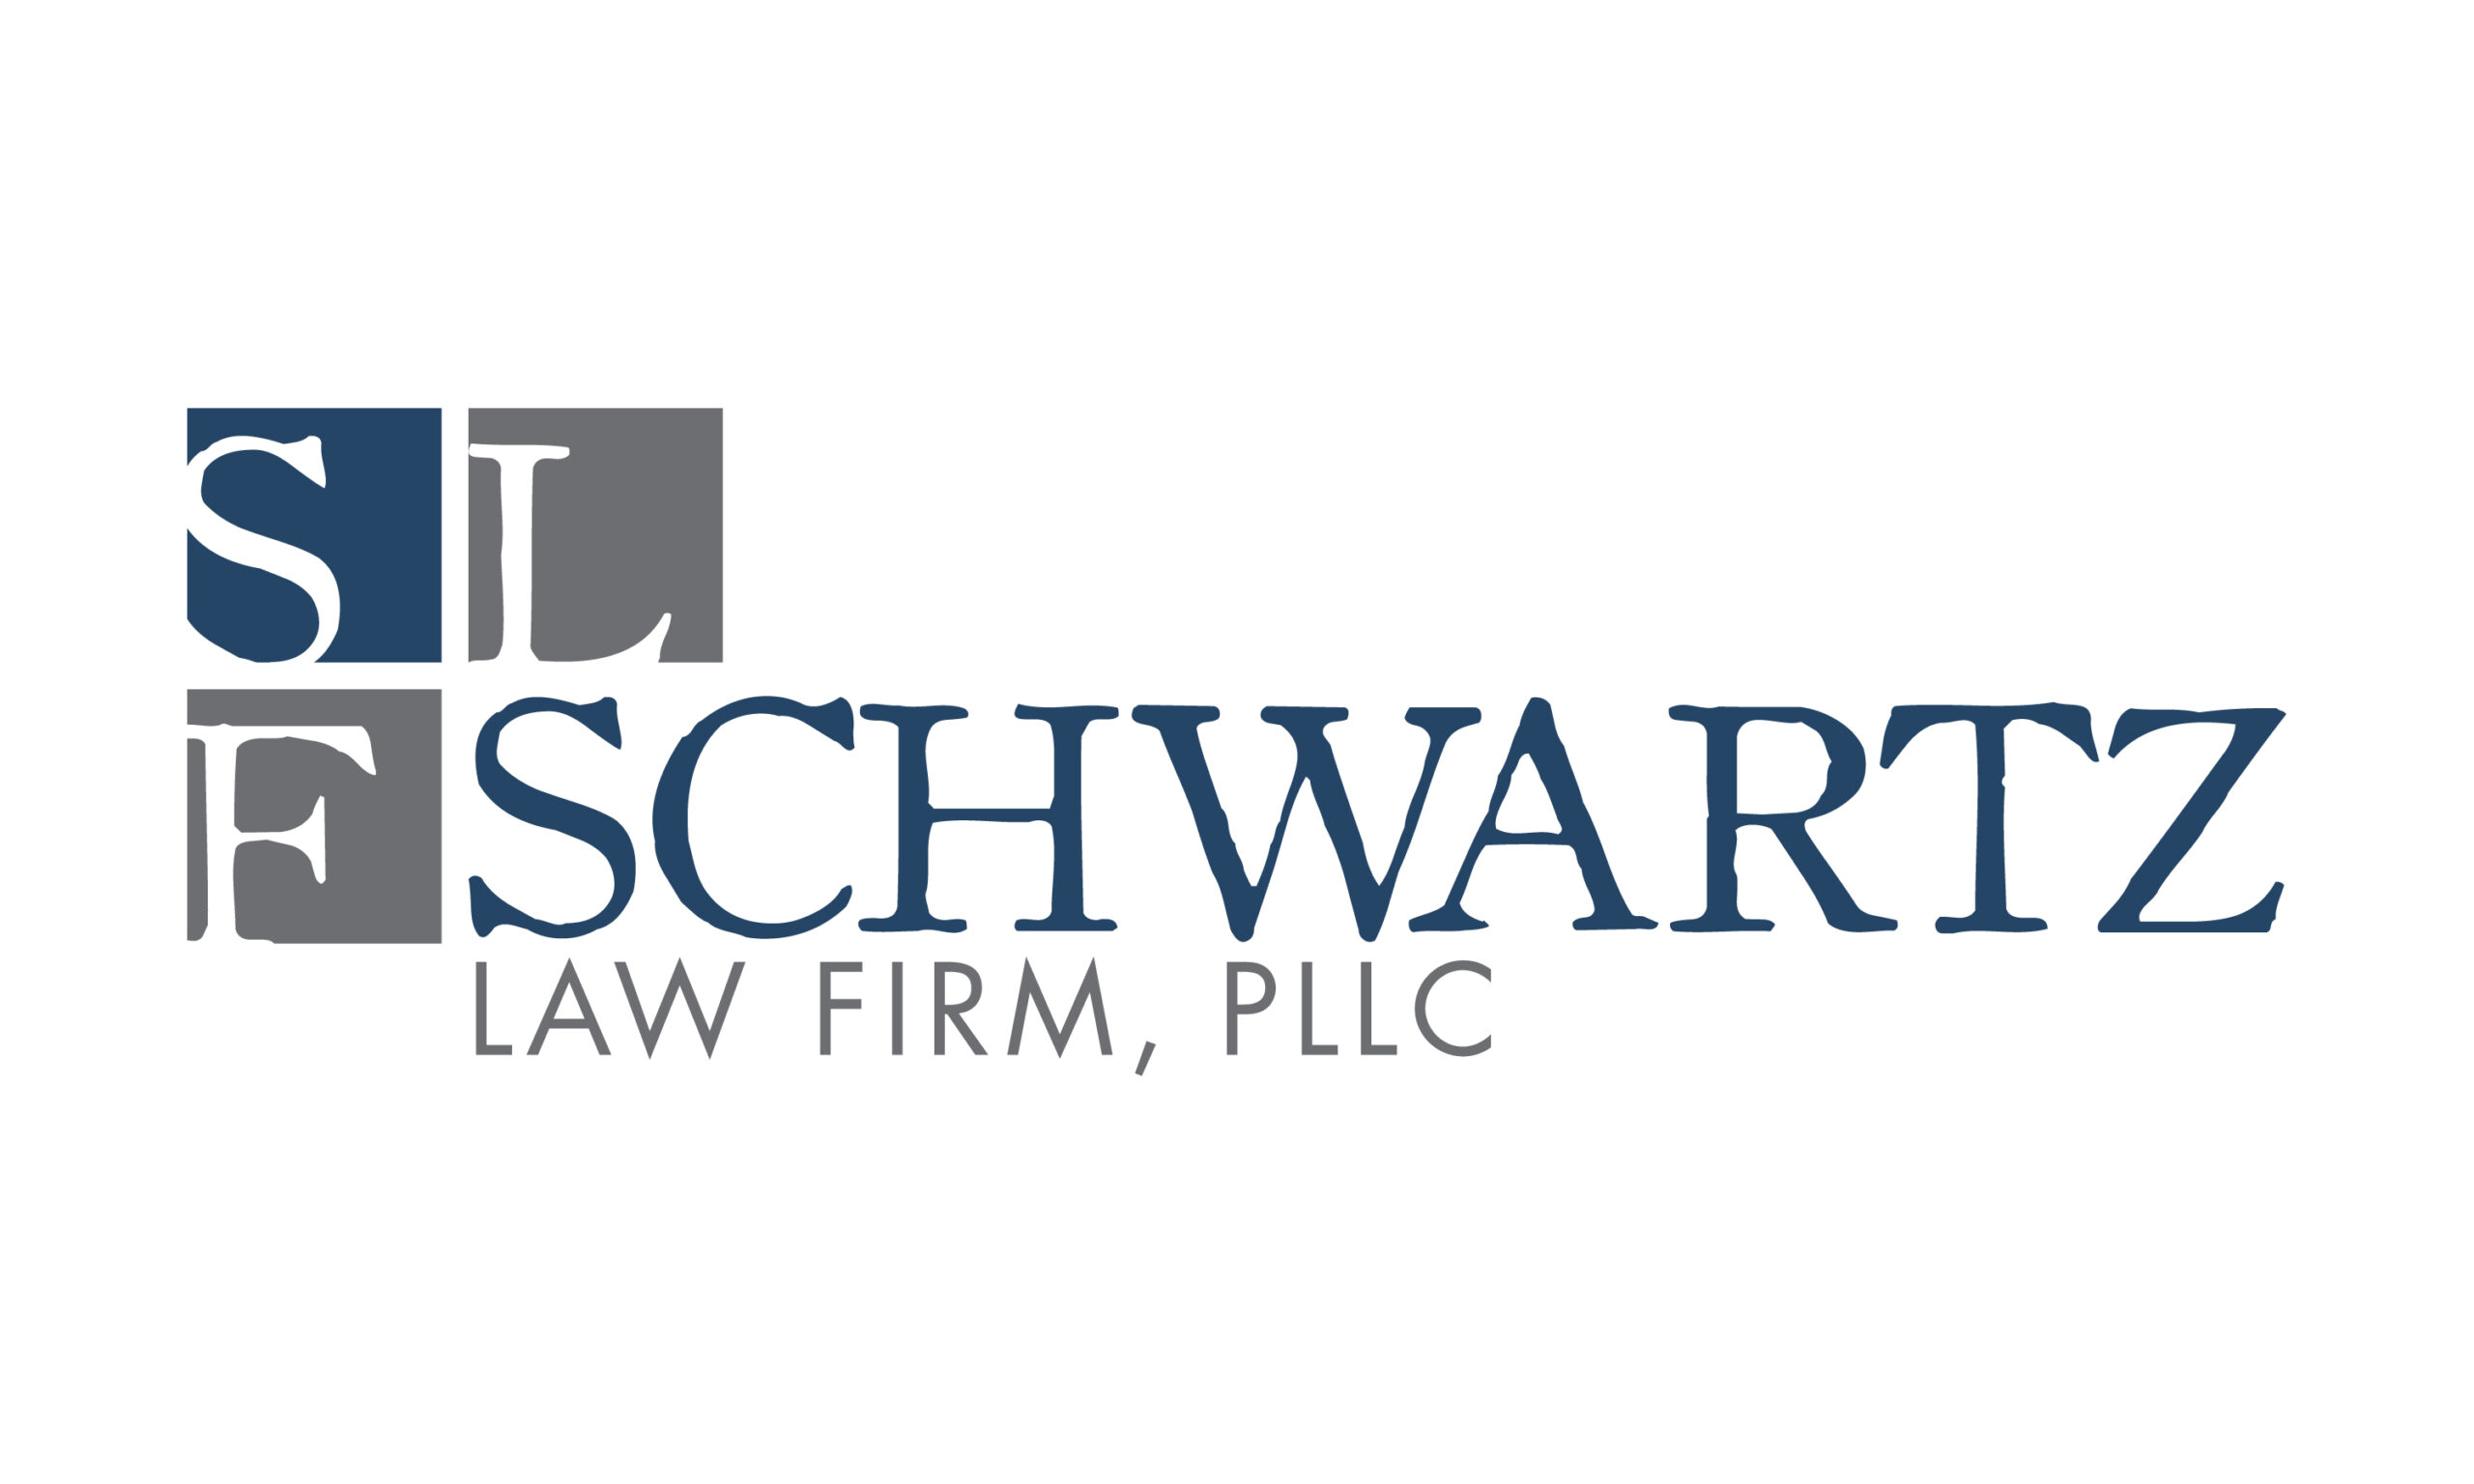 The Schwartz Law Firm, PLLC logo